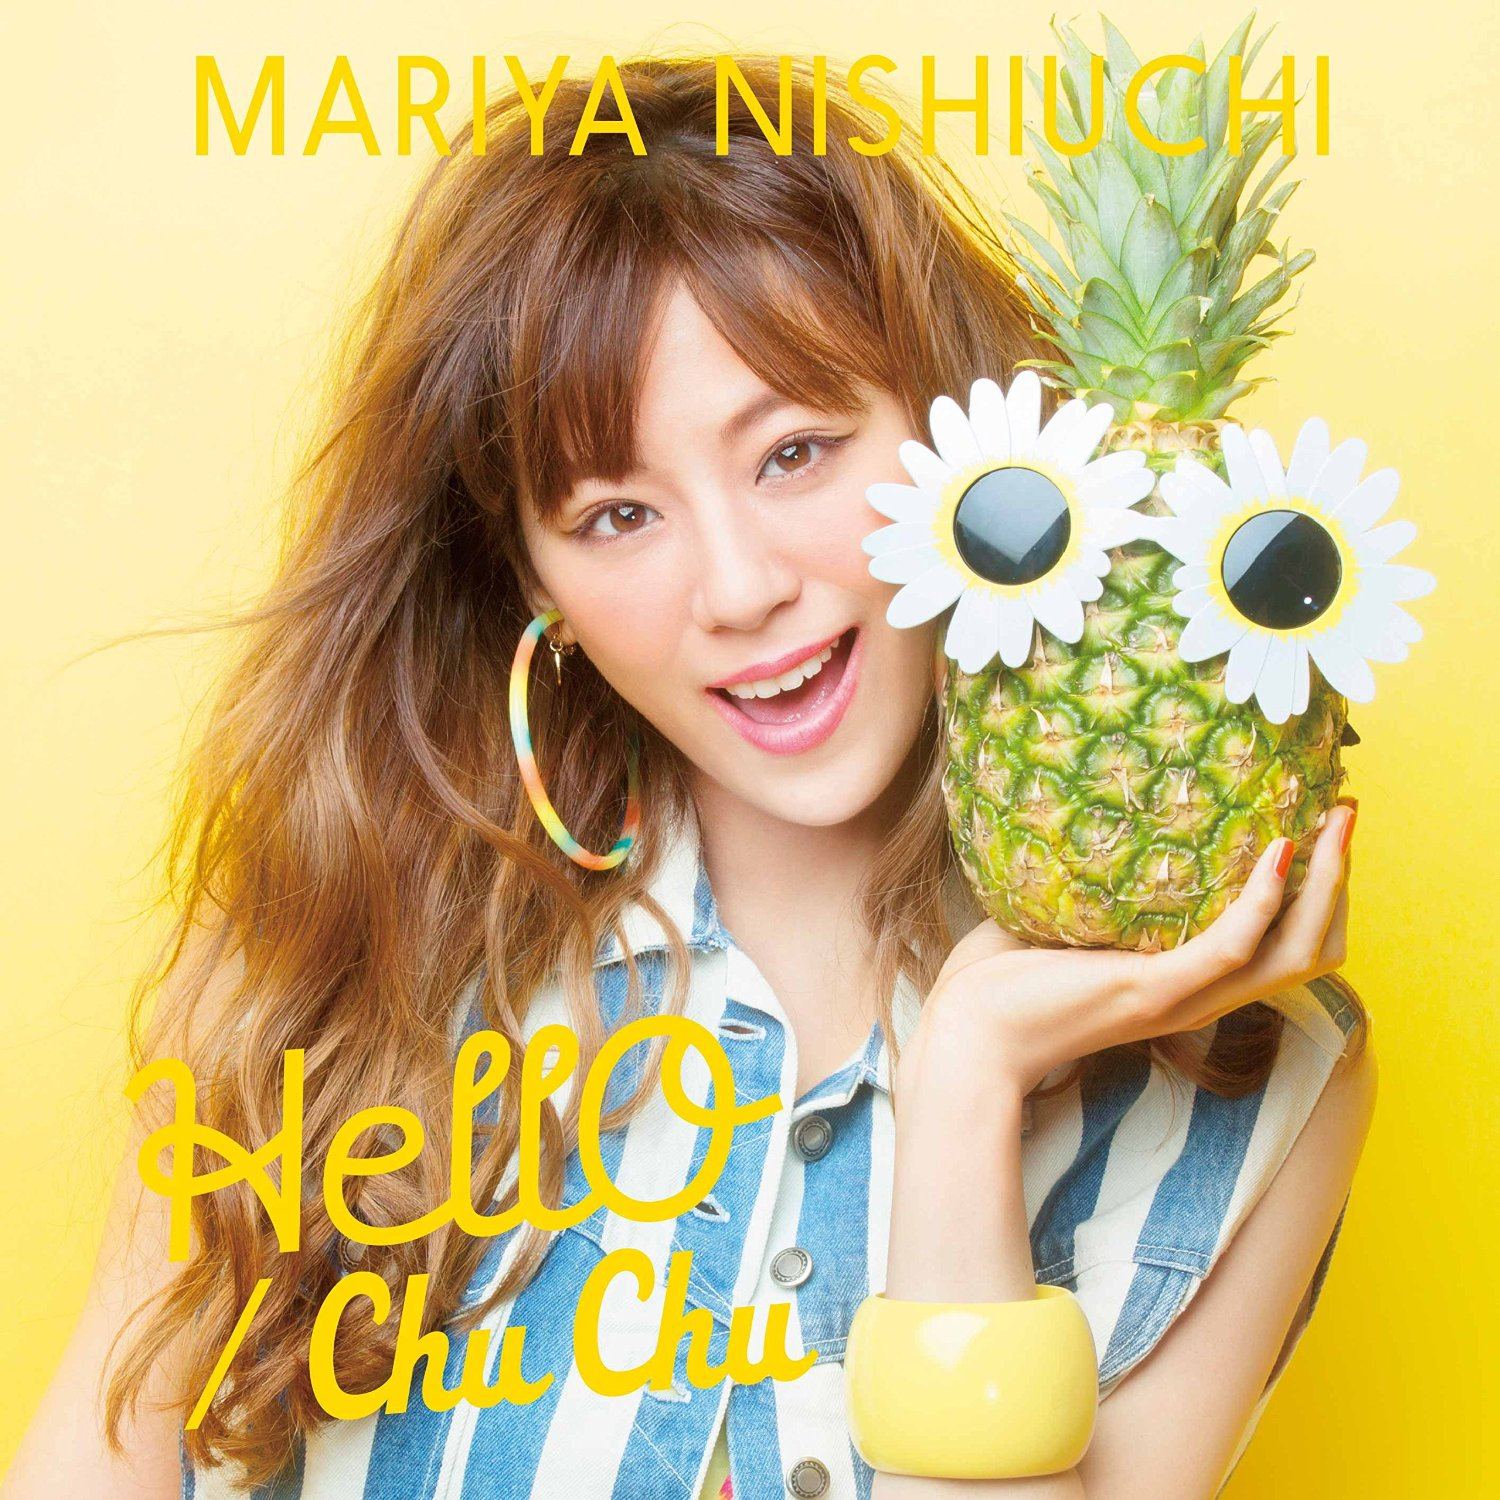 J Pop Hello Chu Chu Cd Dvd Type B Nishiuchi Mariya